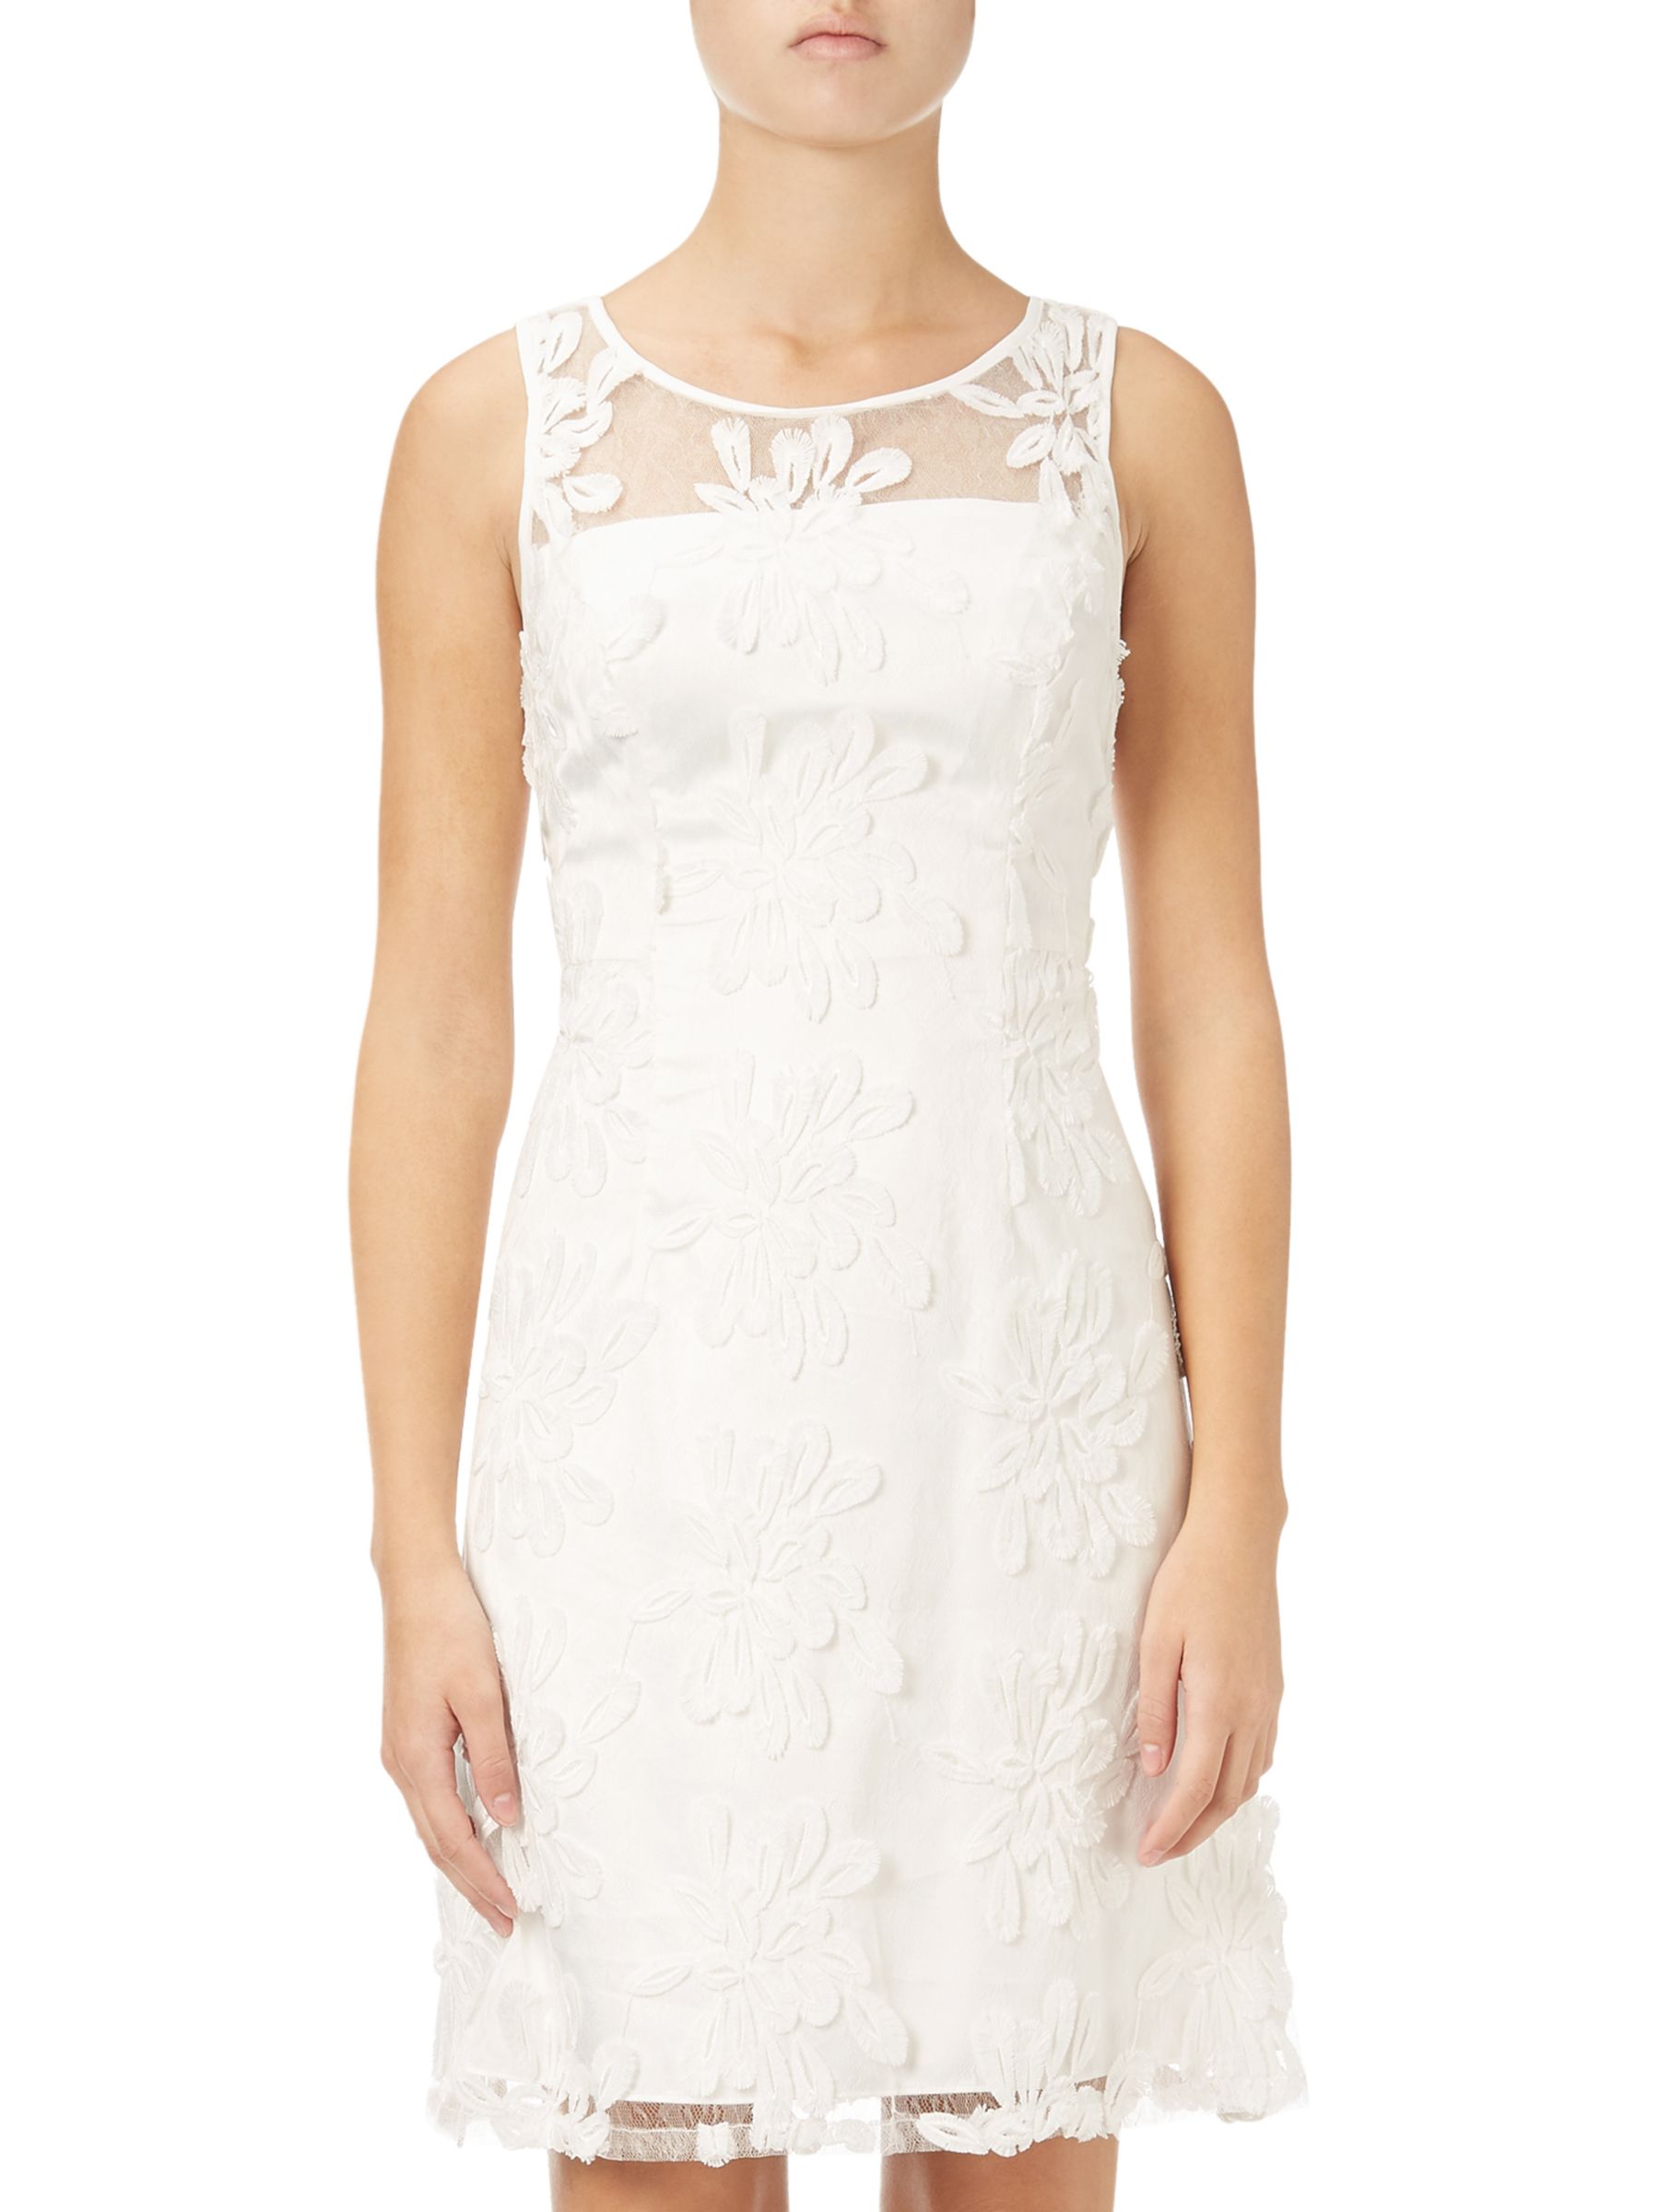 Adrianna Papell Sleeveless Lace Shift Dress, White